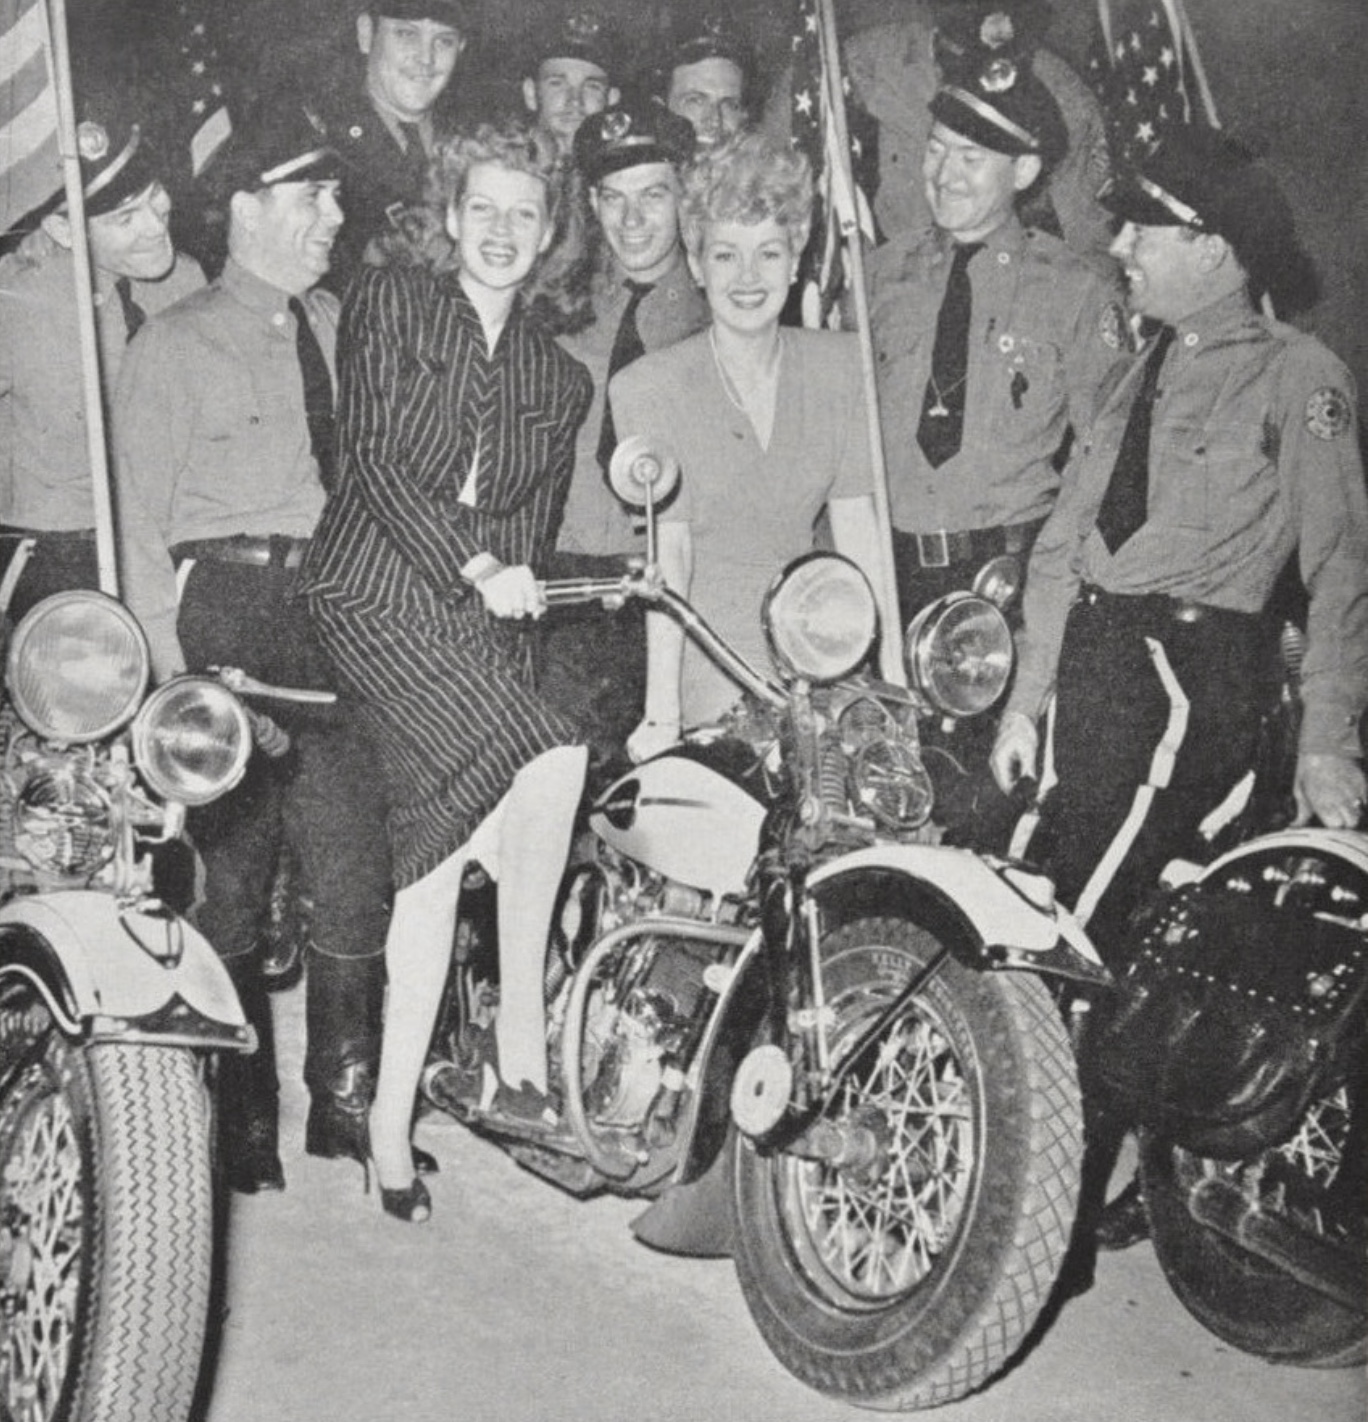 1942 - Harley-Davidson 